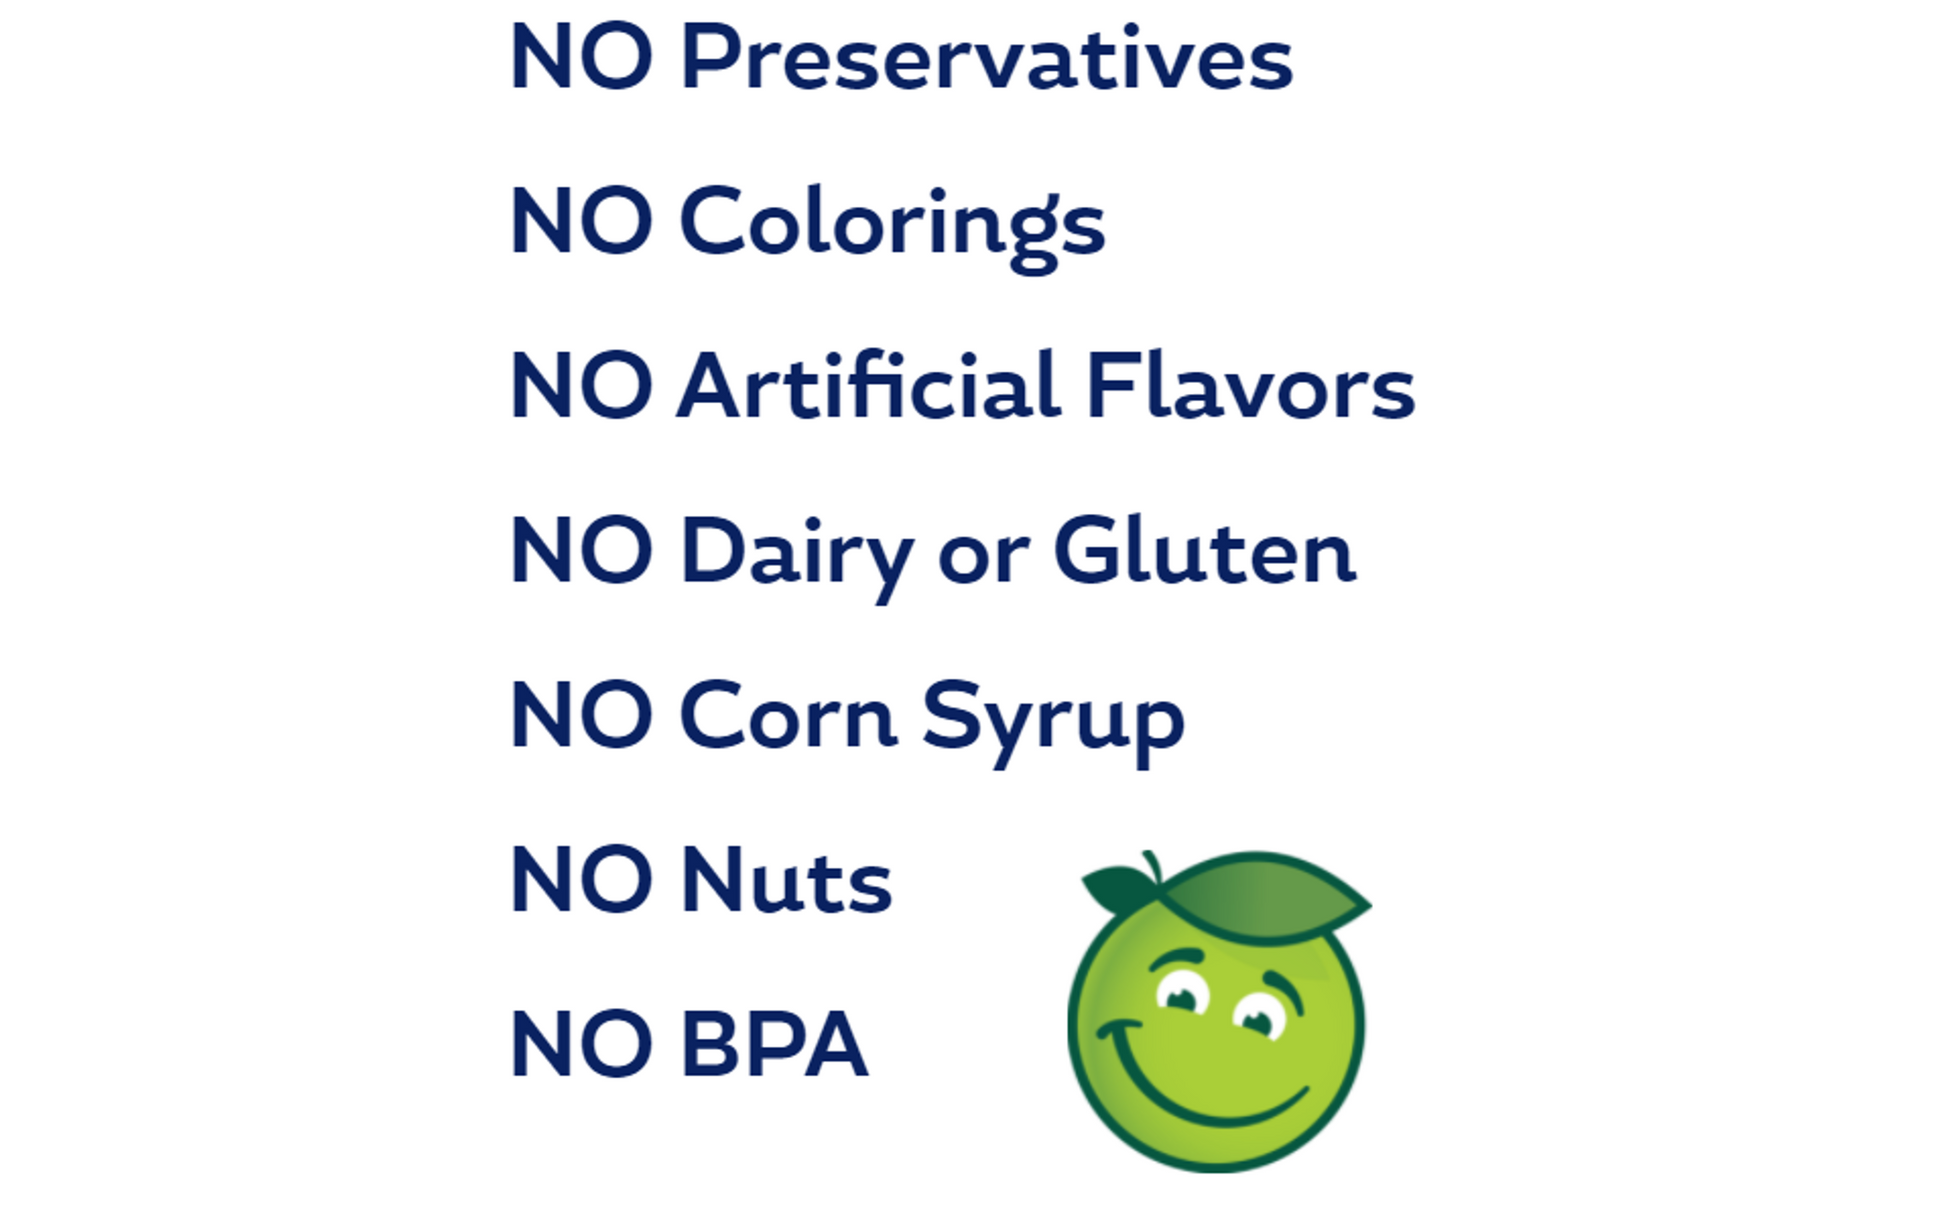 Buddy Fruits Peach, Carrot, & Apple fruit & veggies pouch has no preservatives, no colorings, no artificial flavors, no dairy, no gluten, no corn syrup, no nuts, & no BPA.